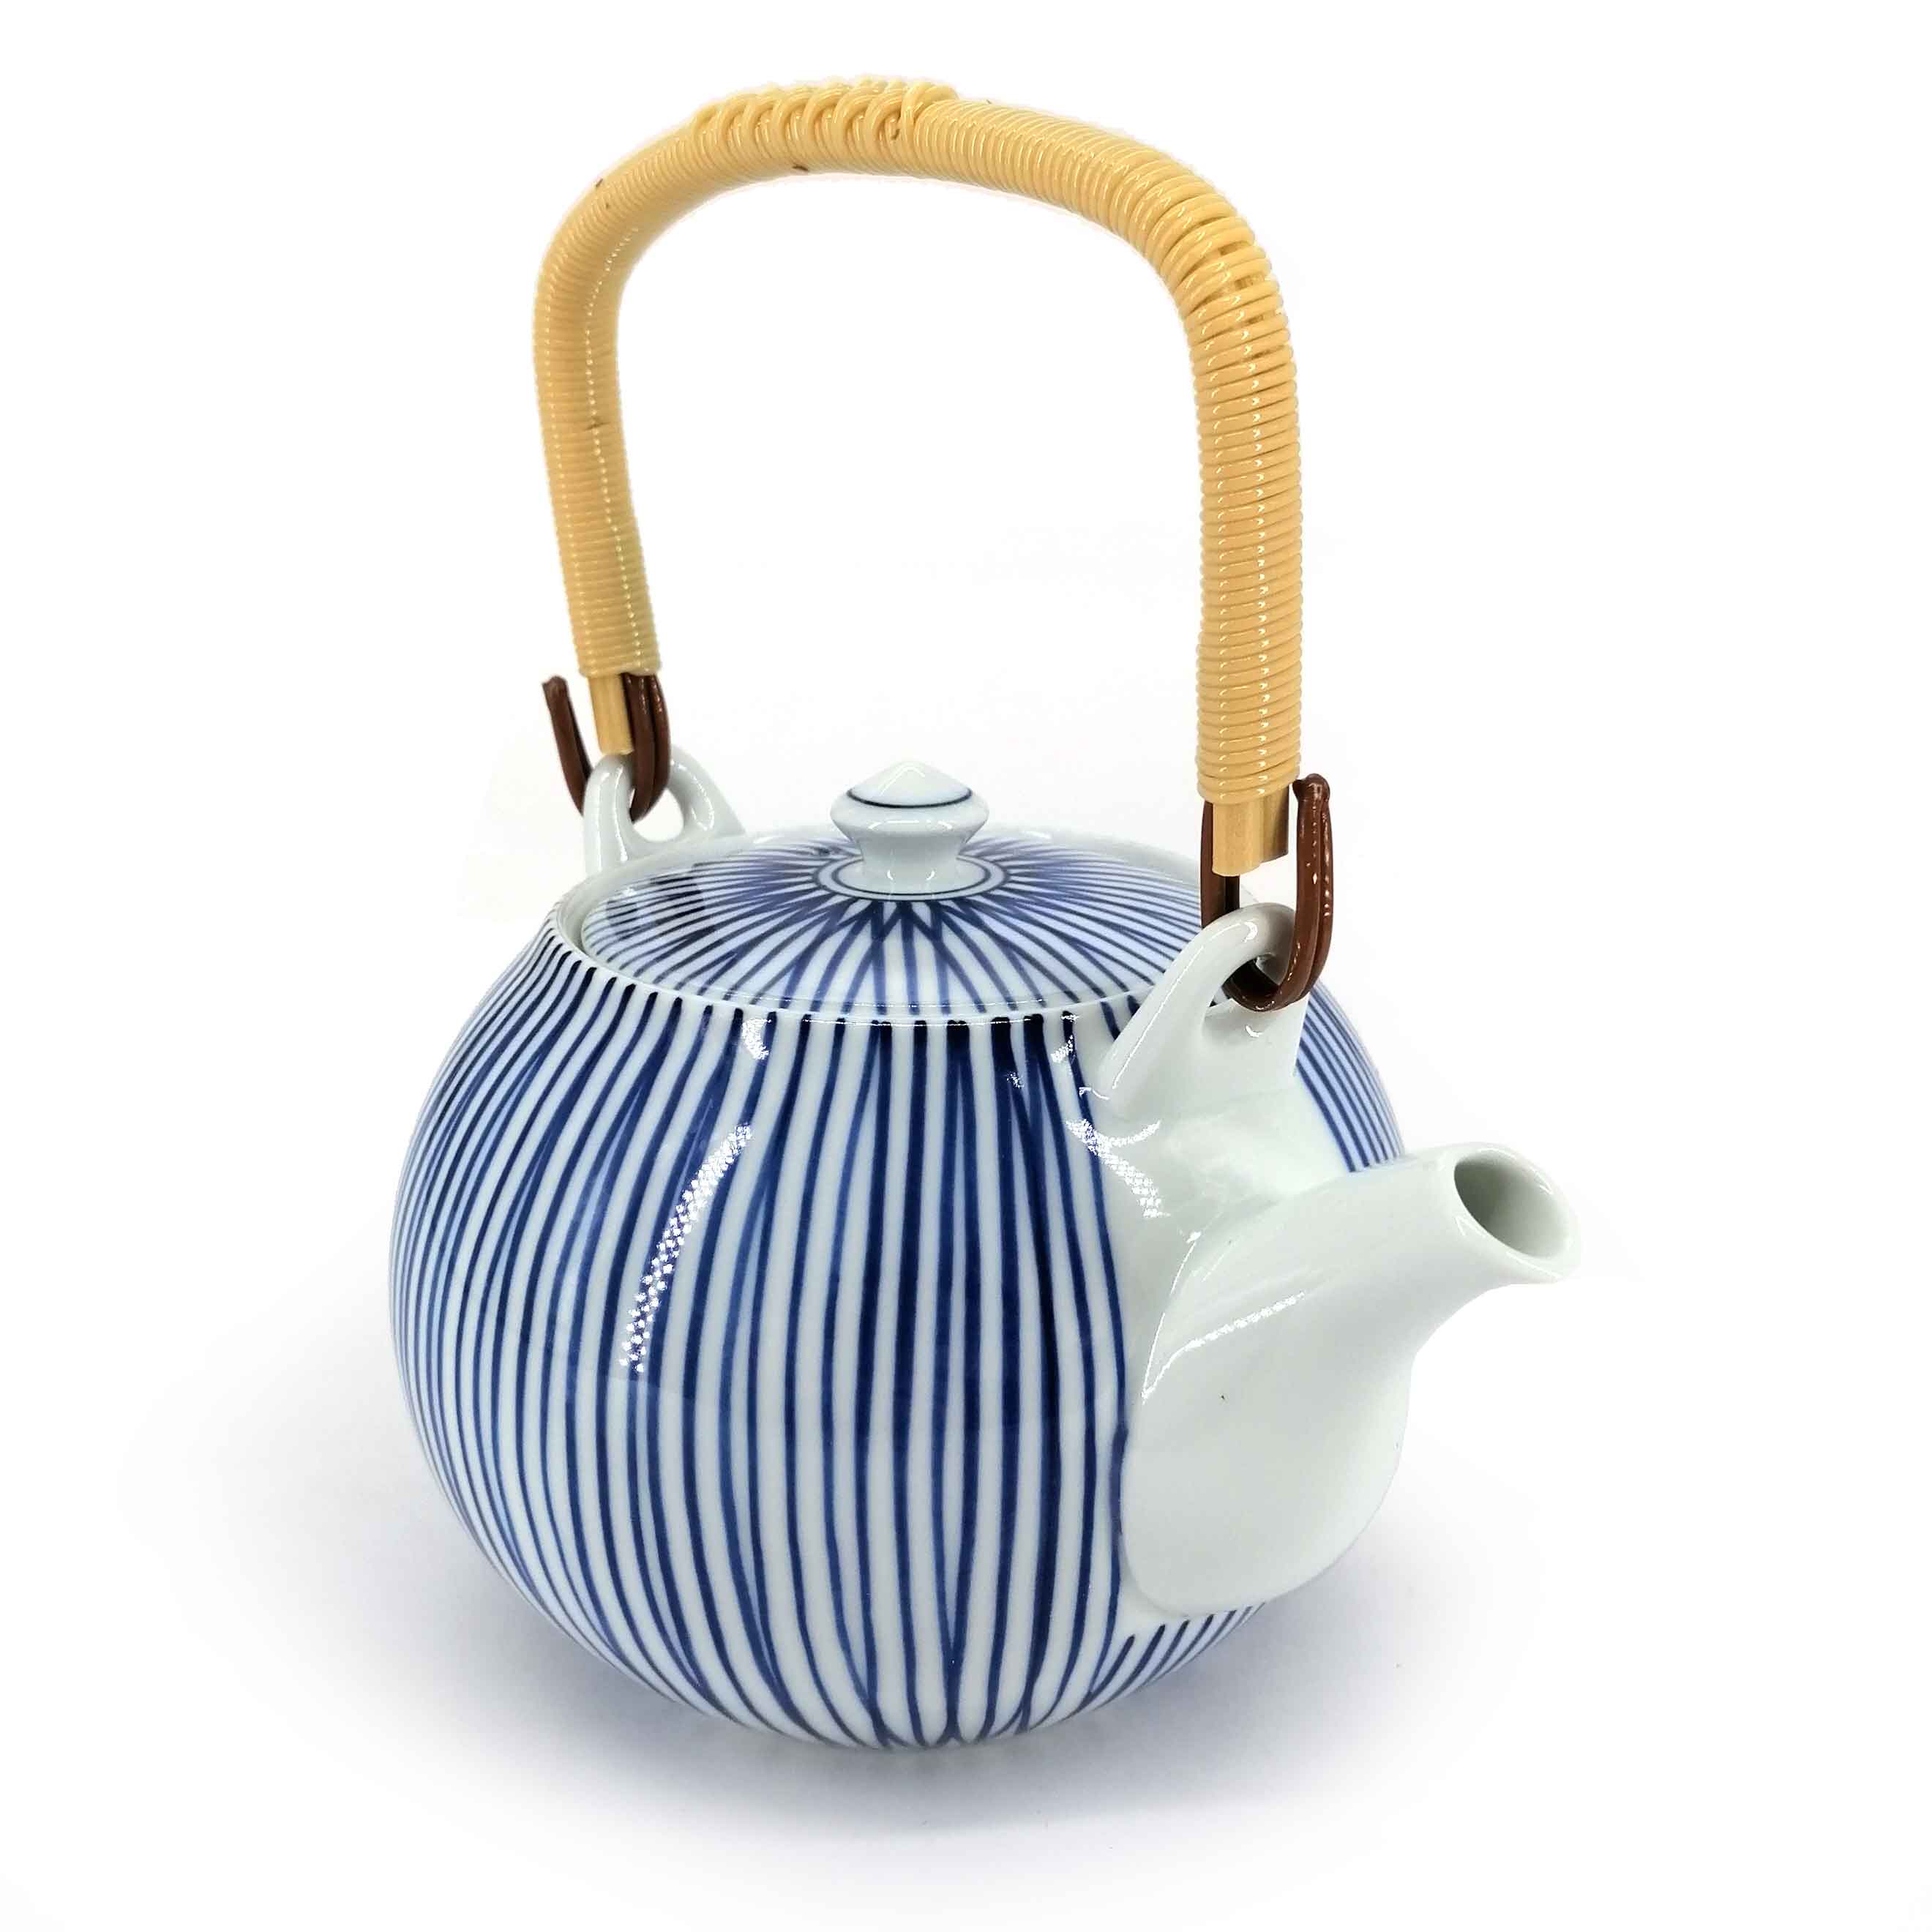 https://tokyo-market.fr/58133/japanese-ceramic-teapot-with-handle-white-blue-stripes-sutoraipu.jpg